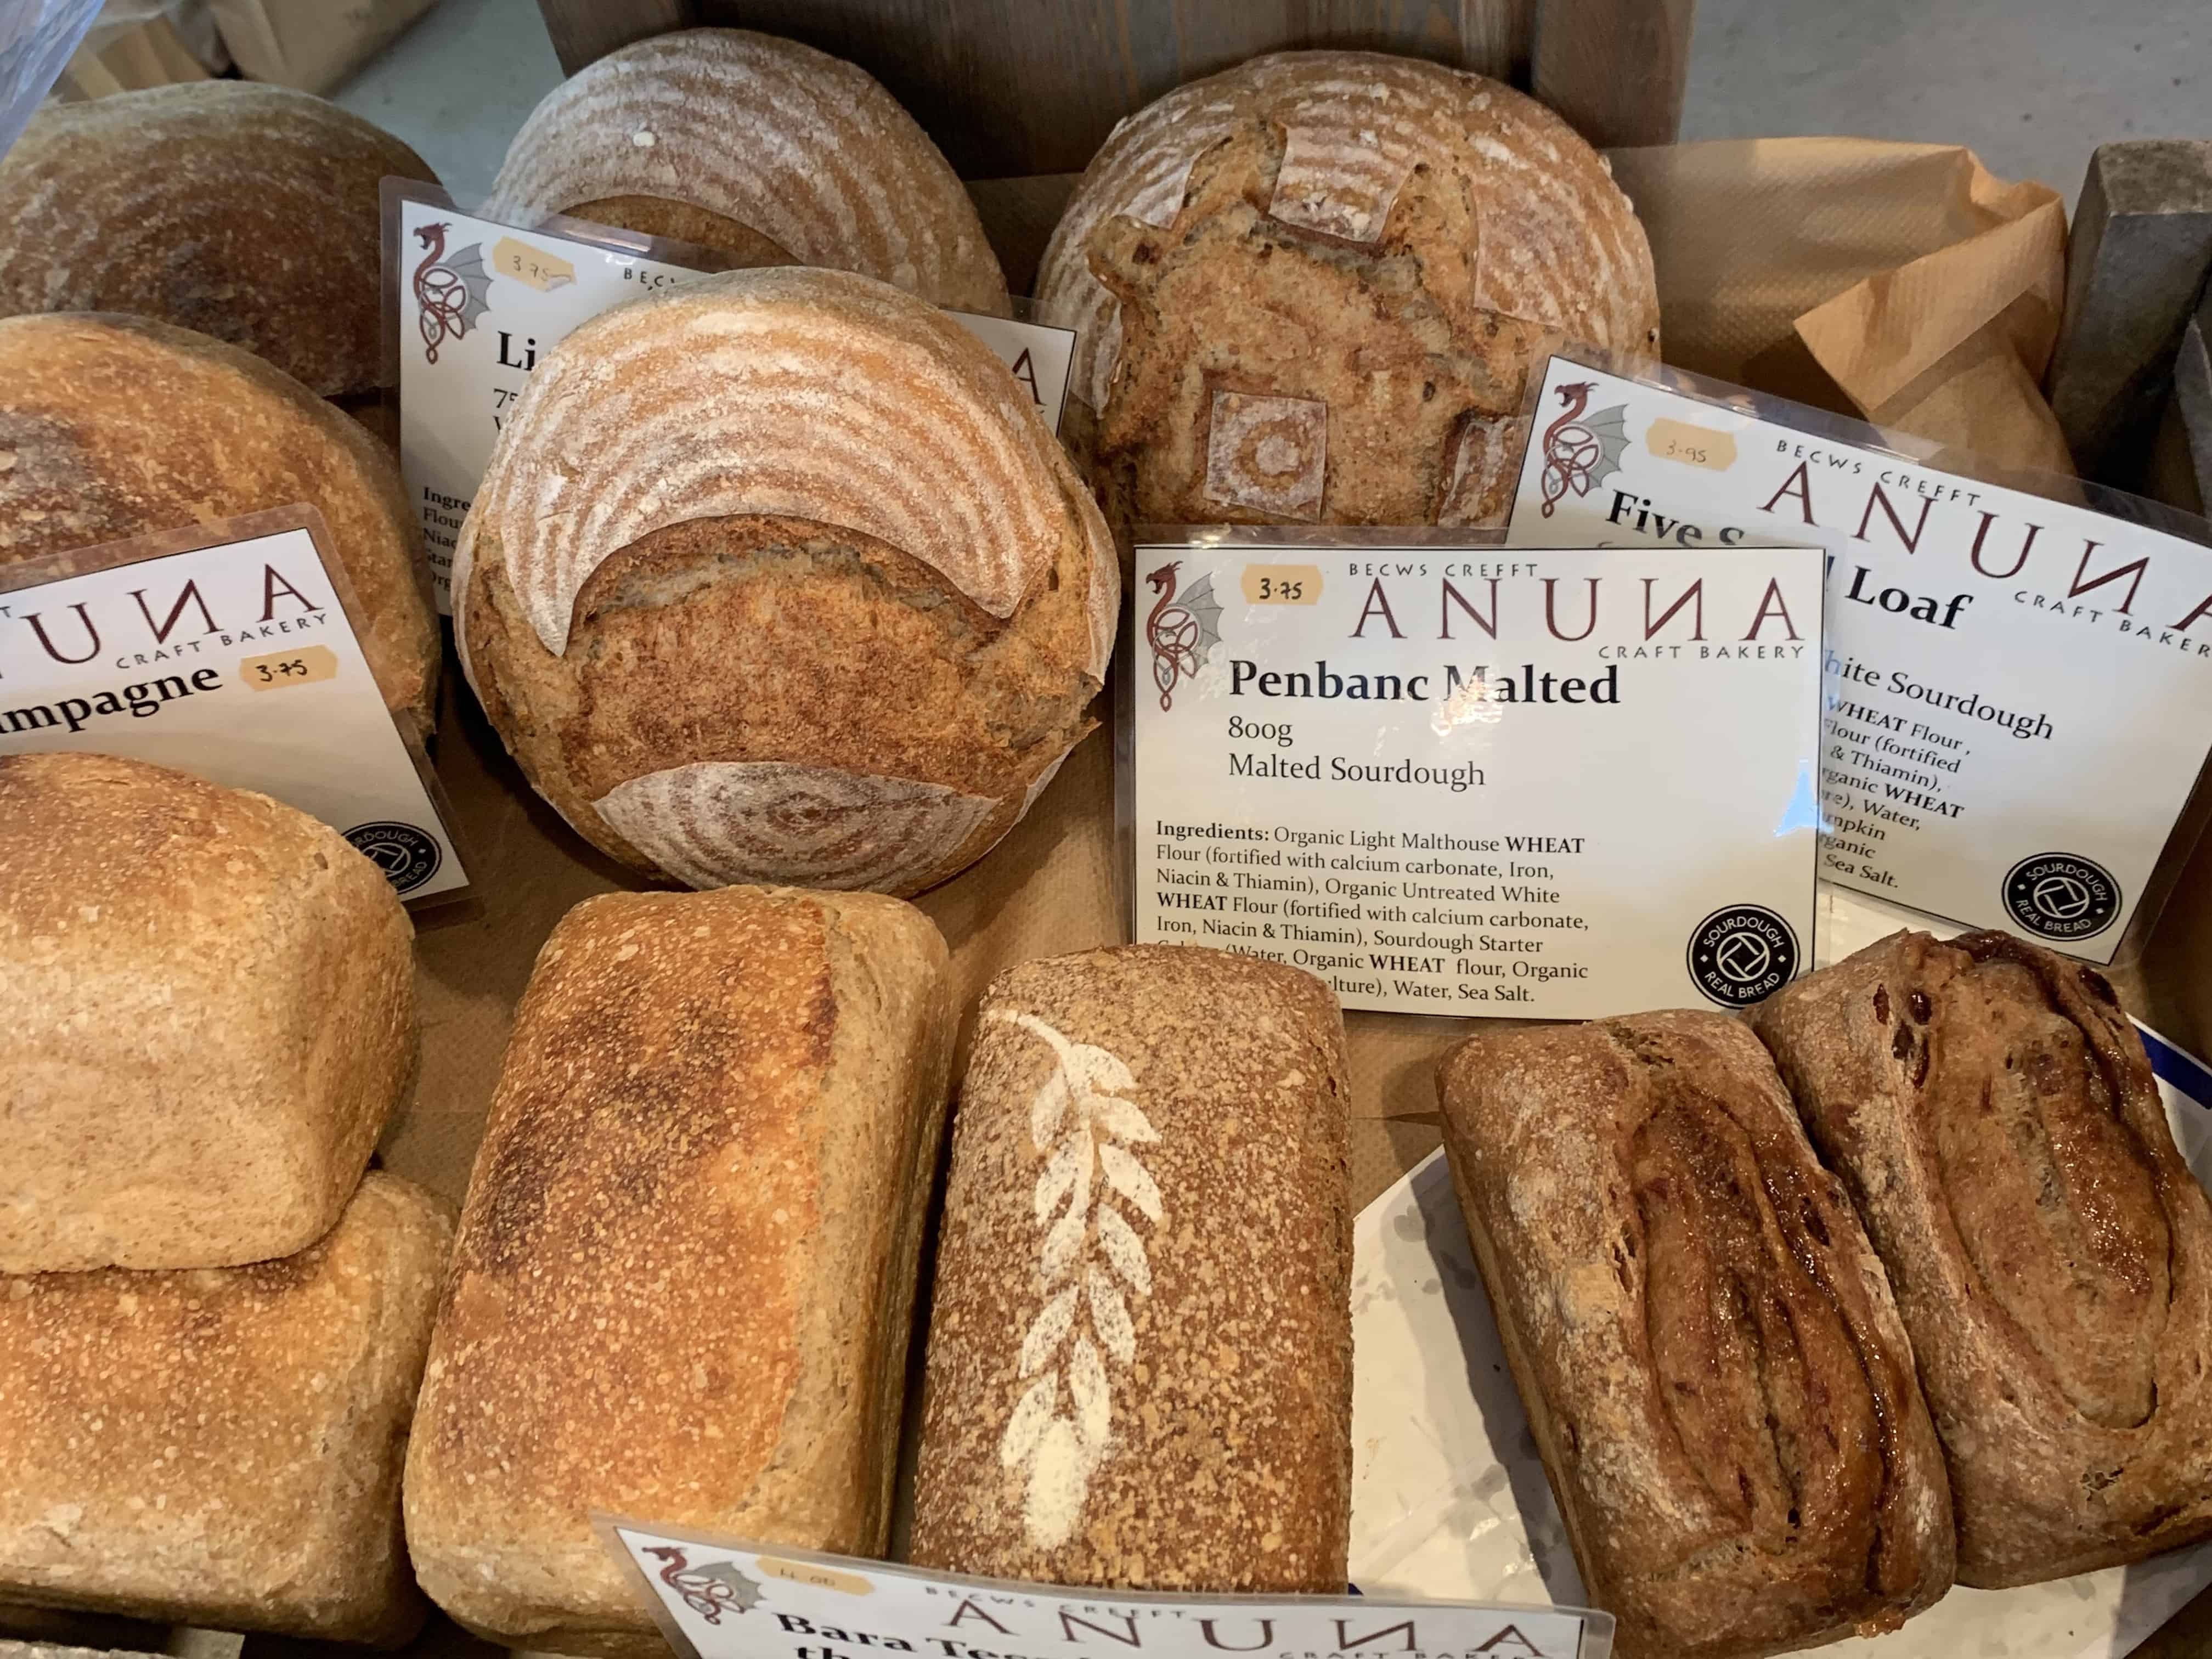 Anuna Organic Sourdough bread selection - fruit loaf